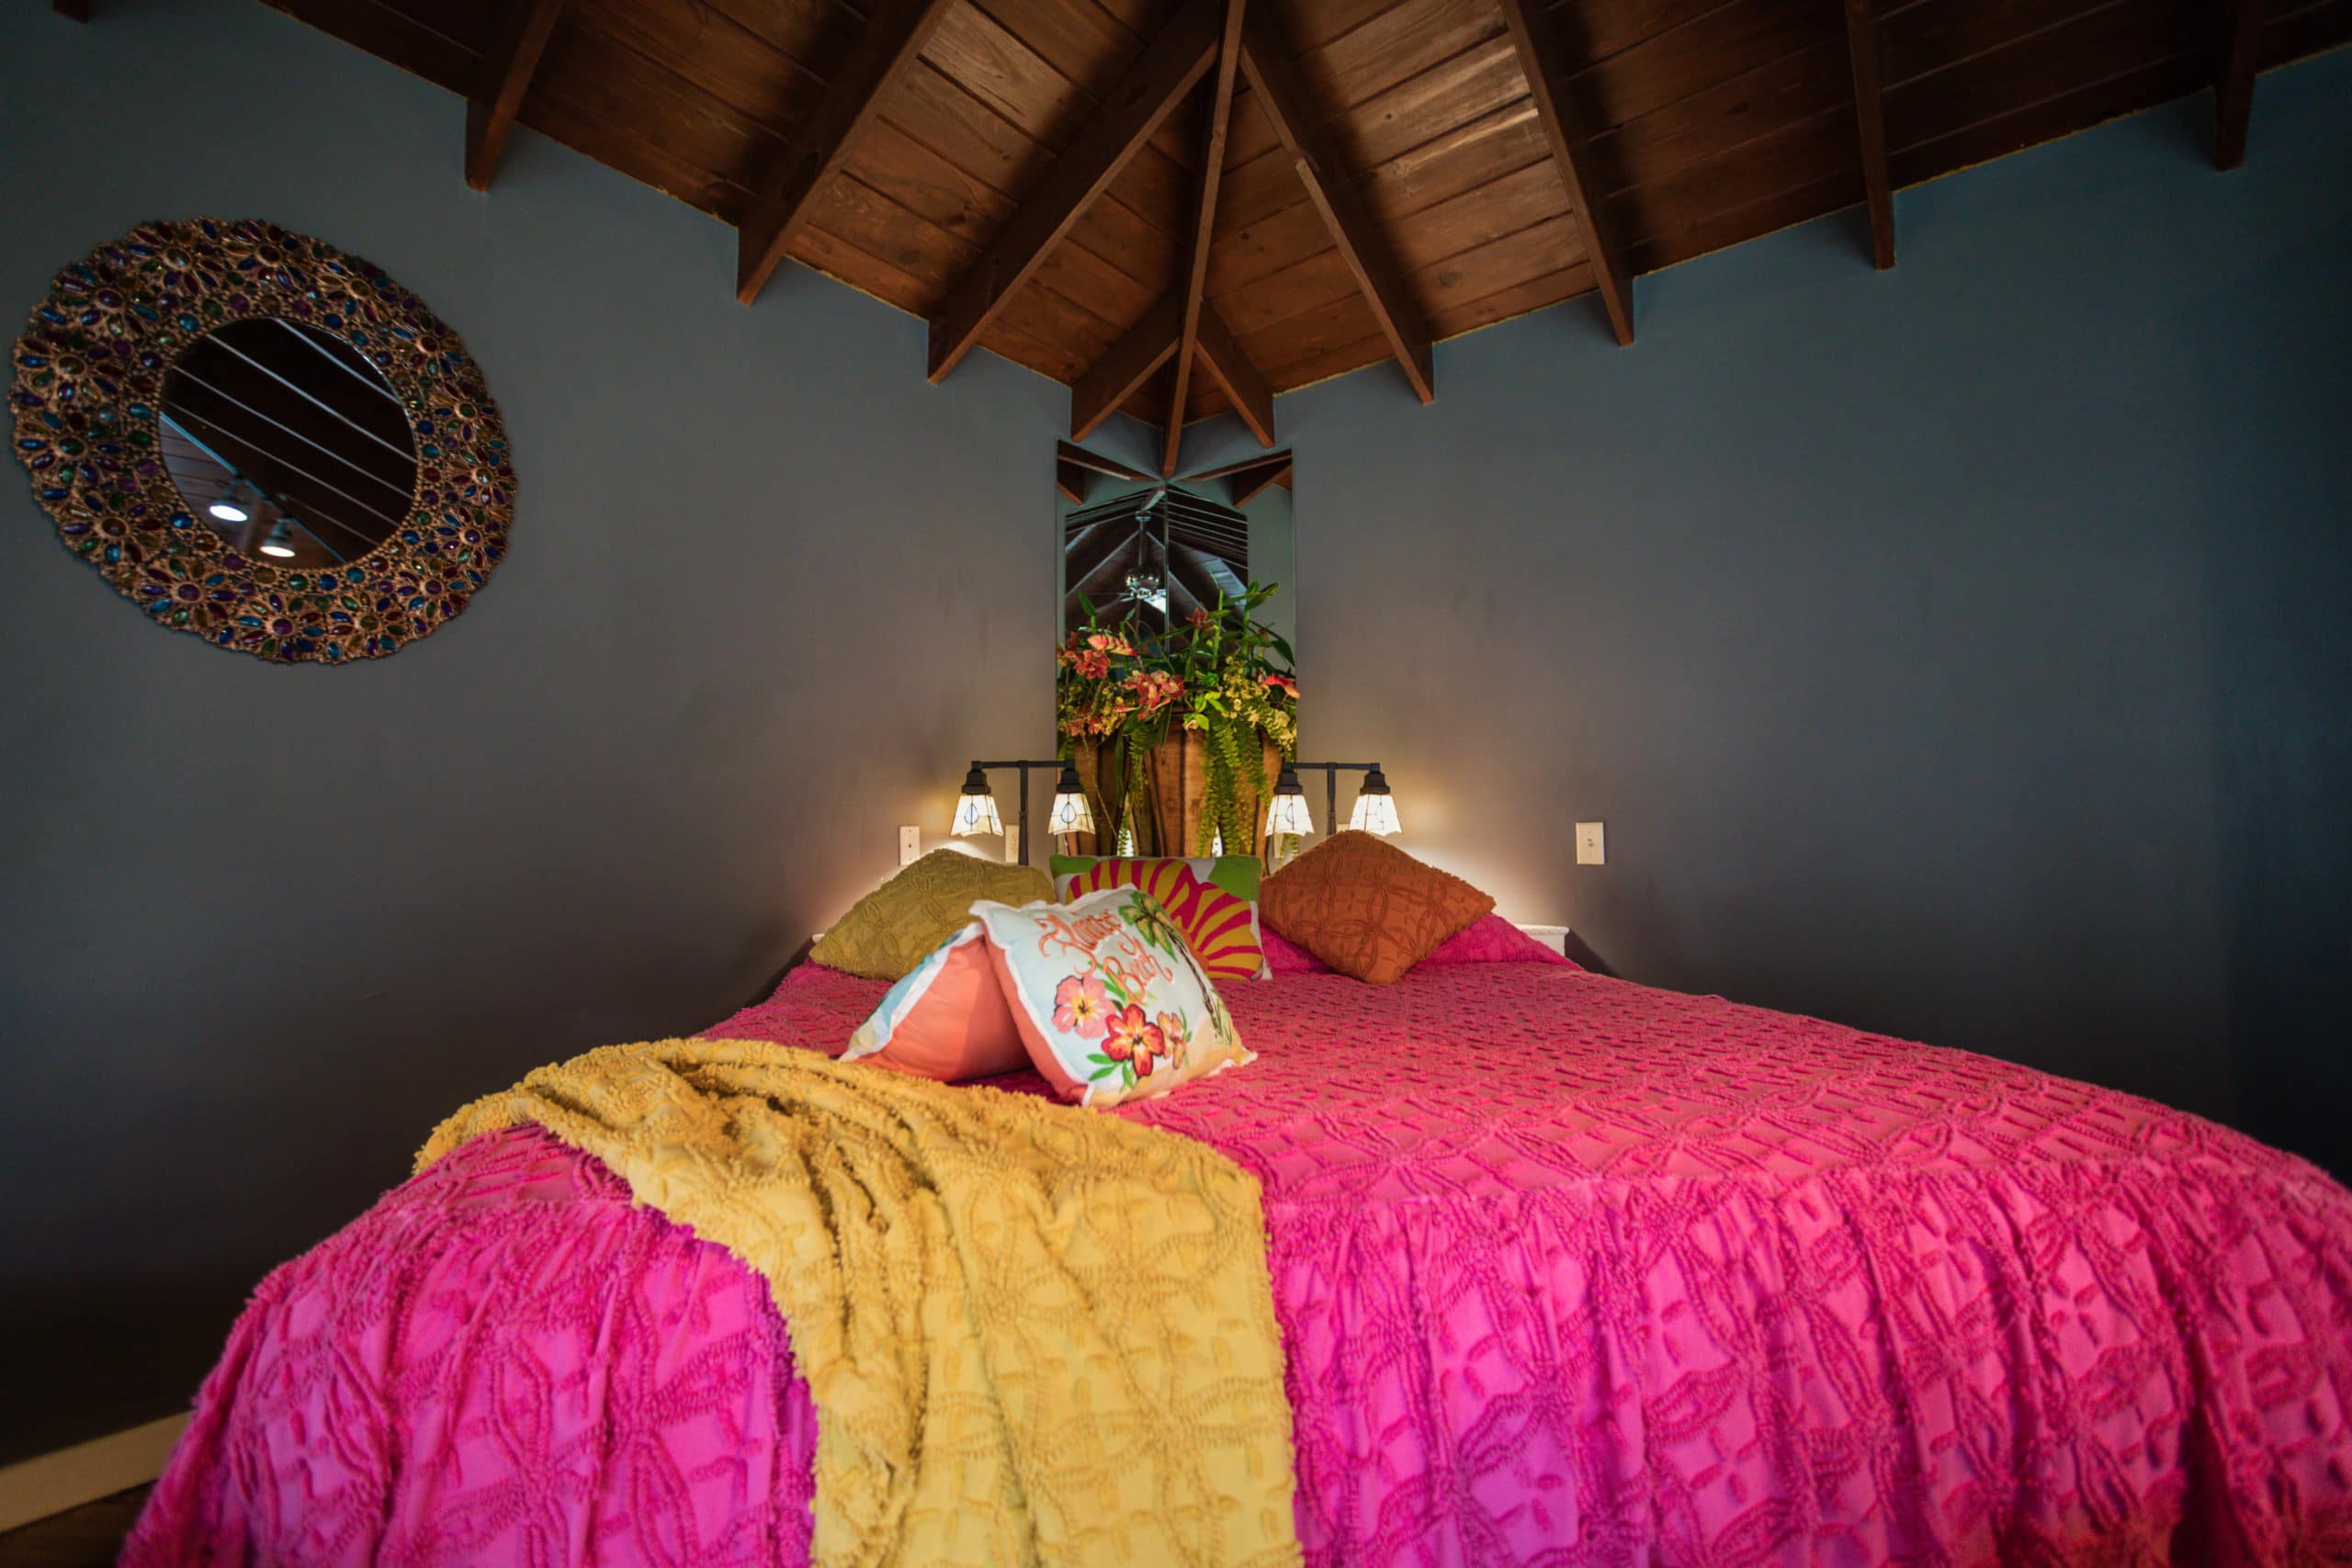 rivers-bend-cabin-02-romantic-retreat-bedroom-diagonal-view-pink-blanket-scaled